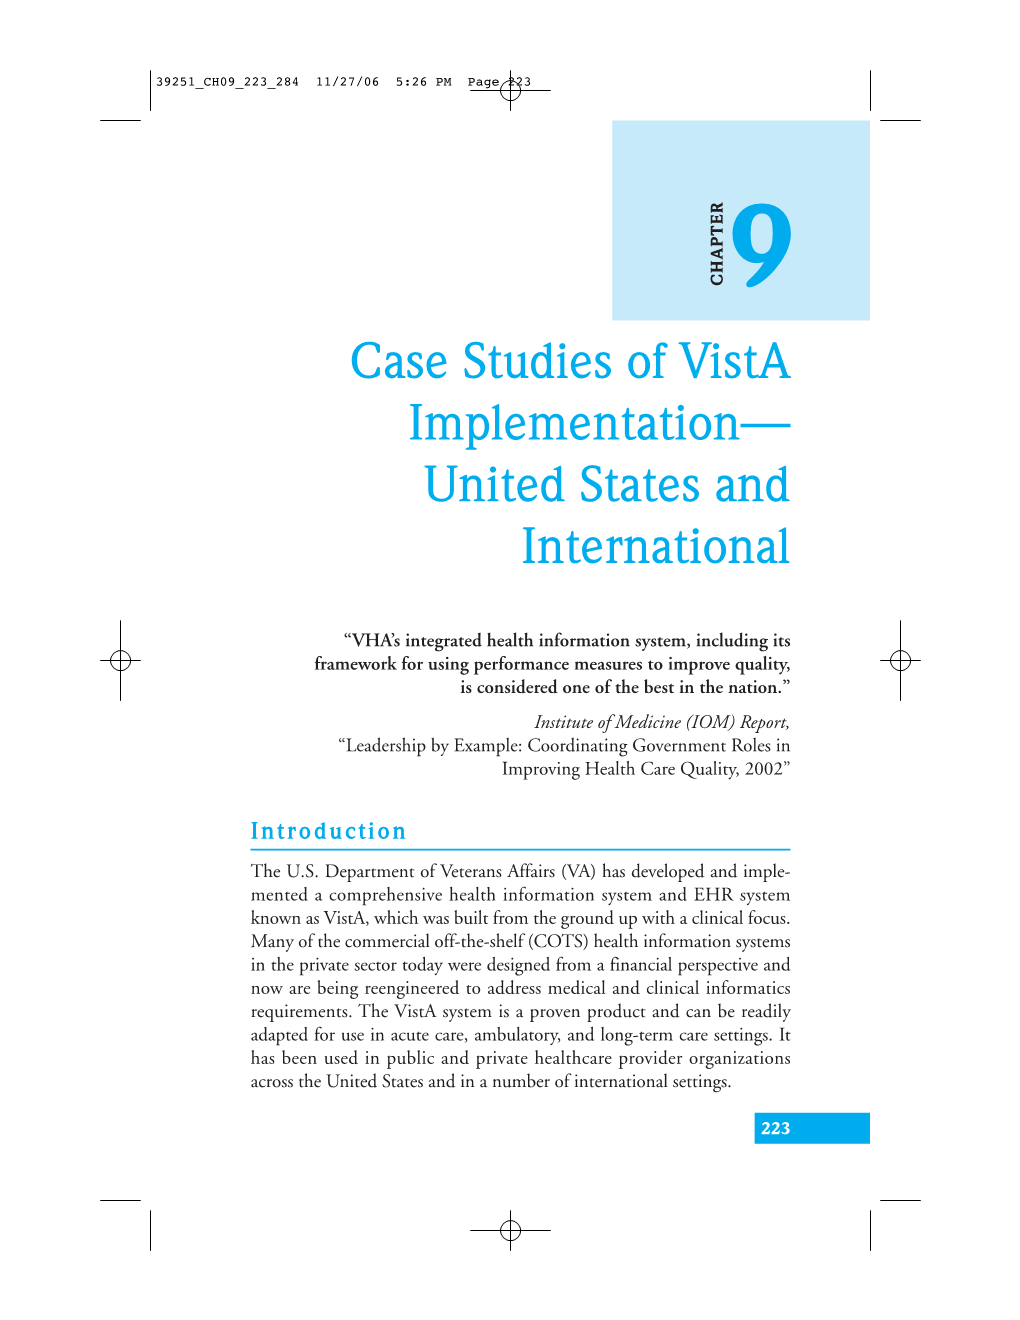 Case Studies of Vista Implementation— United States and International